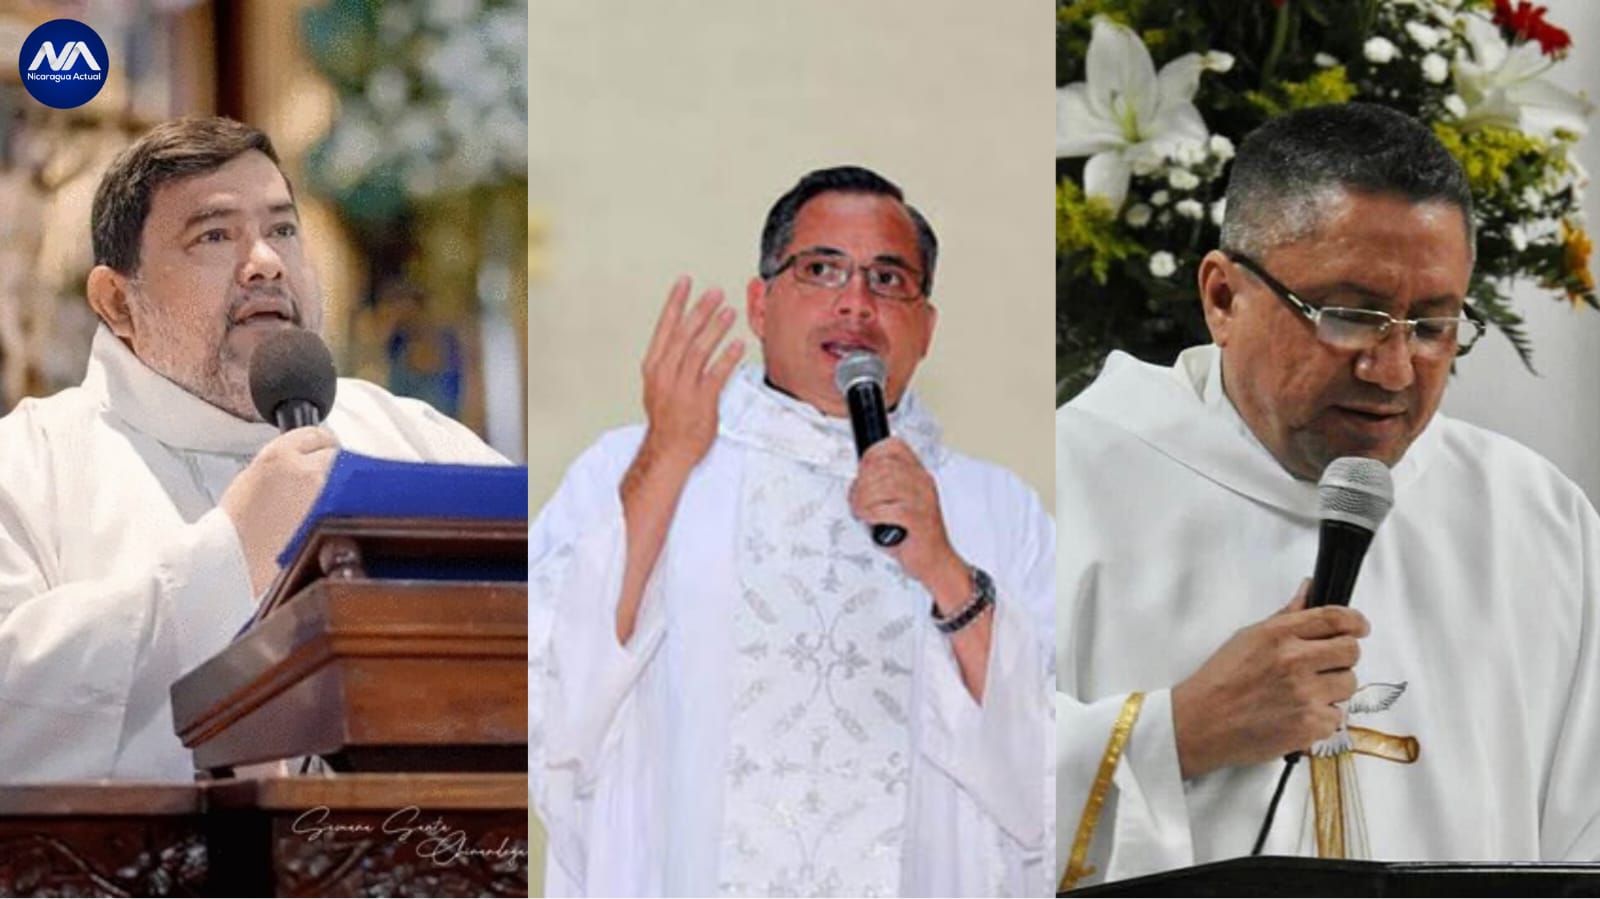 Dos sacerdotes y un obispo son acogidos por España a casi 3 meses de su destierro de Nicaragua.